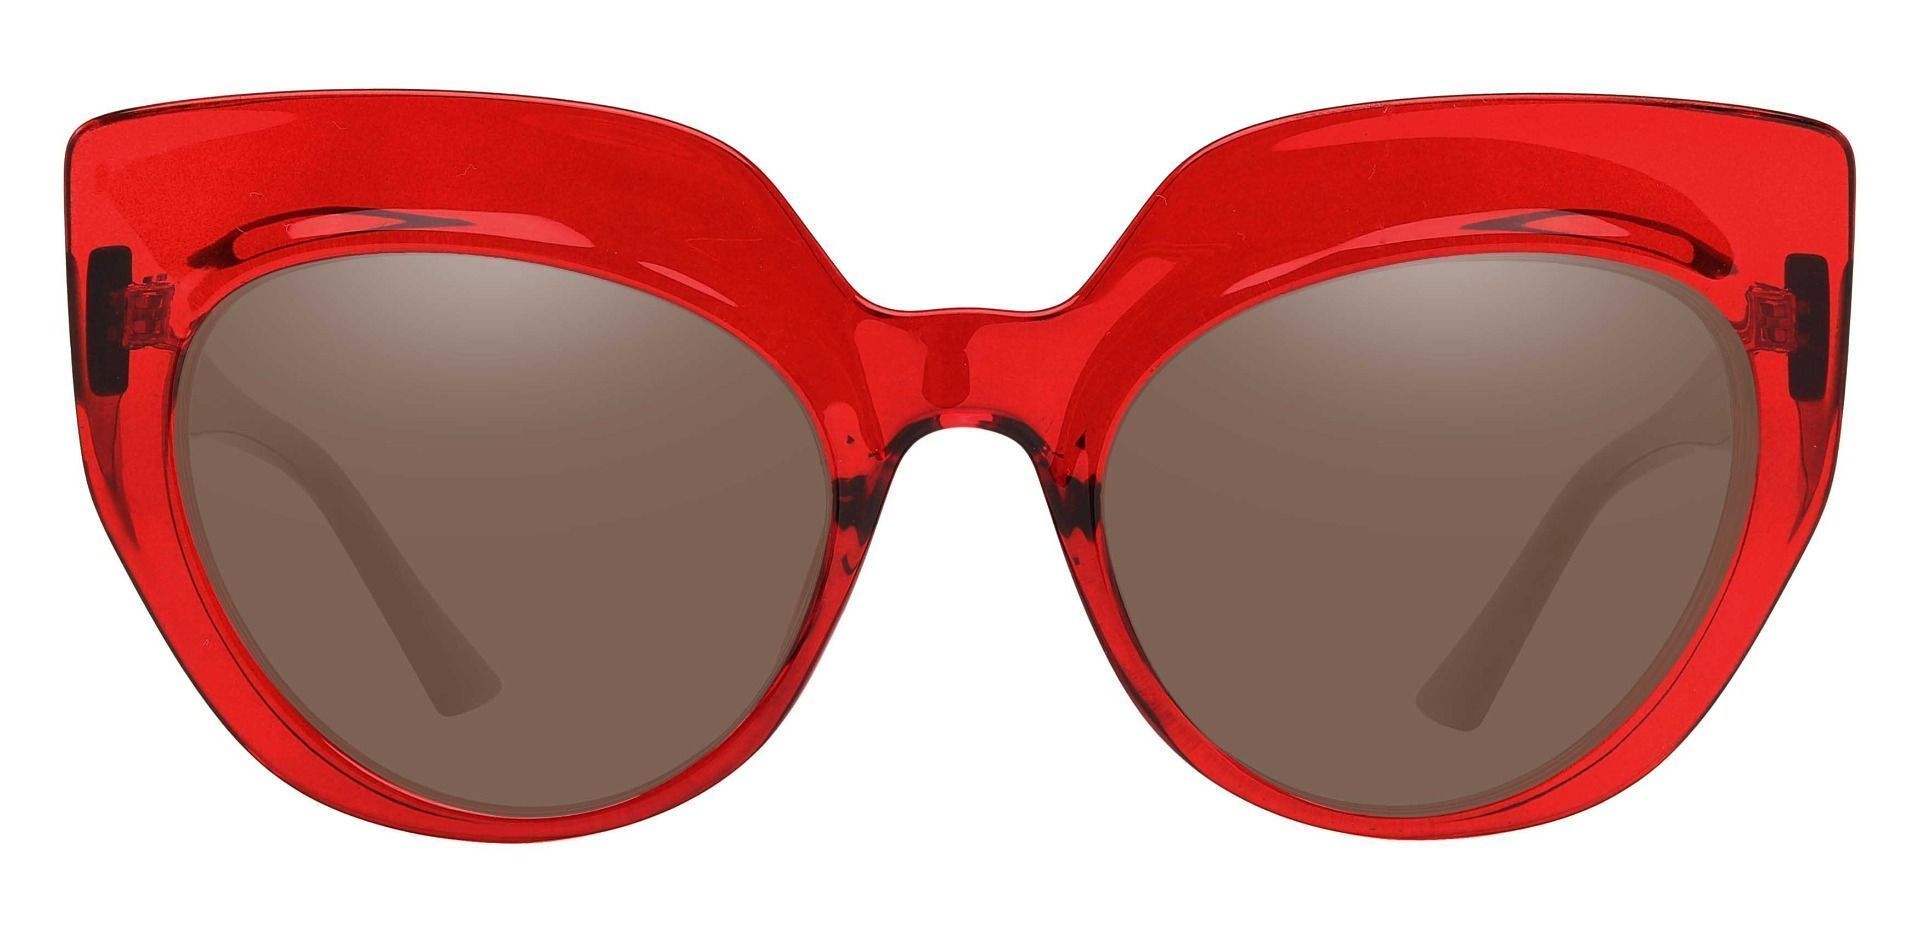 Starlight Cat Eye Single Vision Sunglasses - Red Frame With Gray Lenses ...